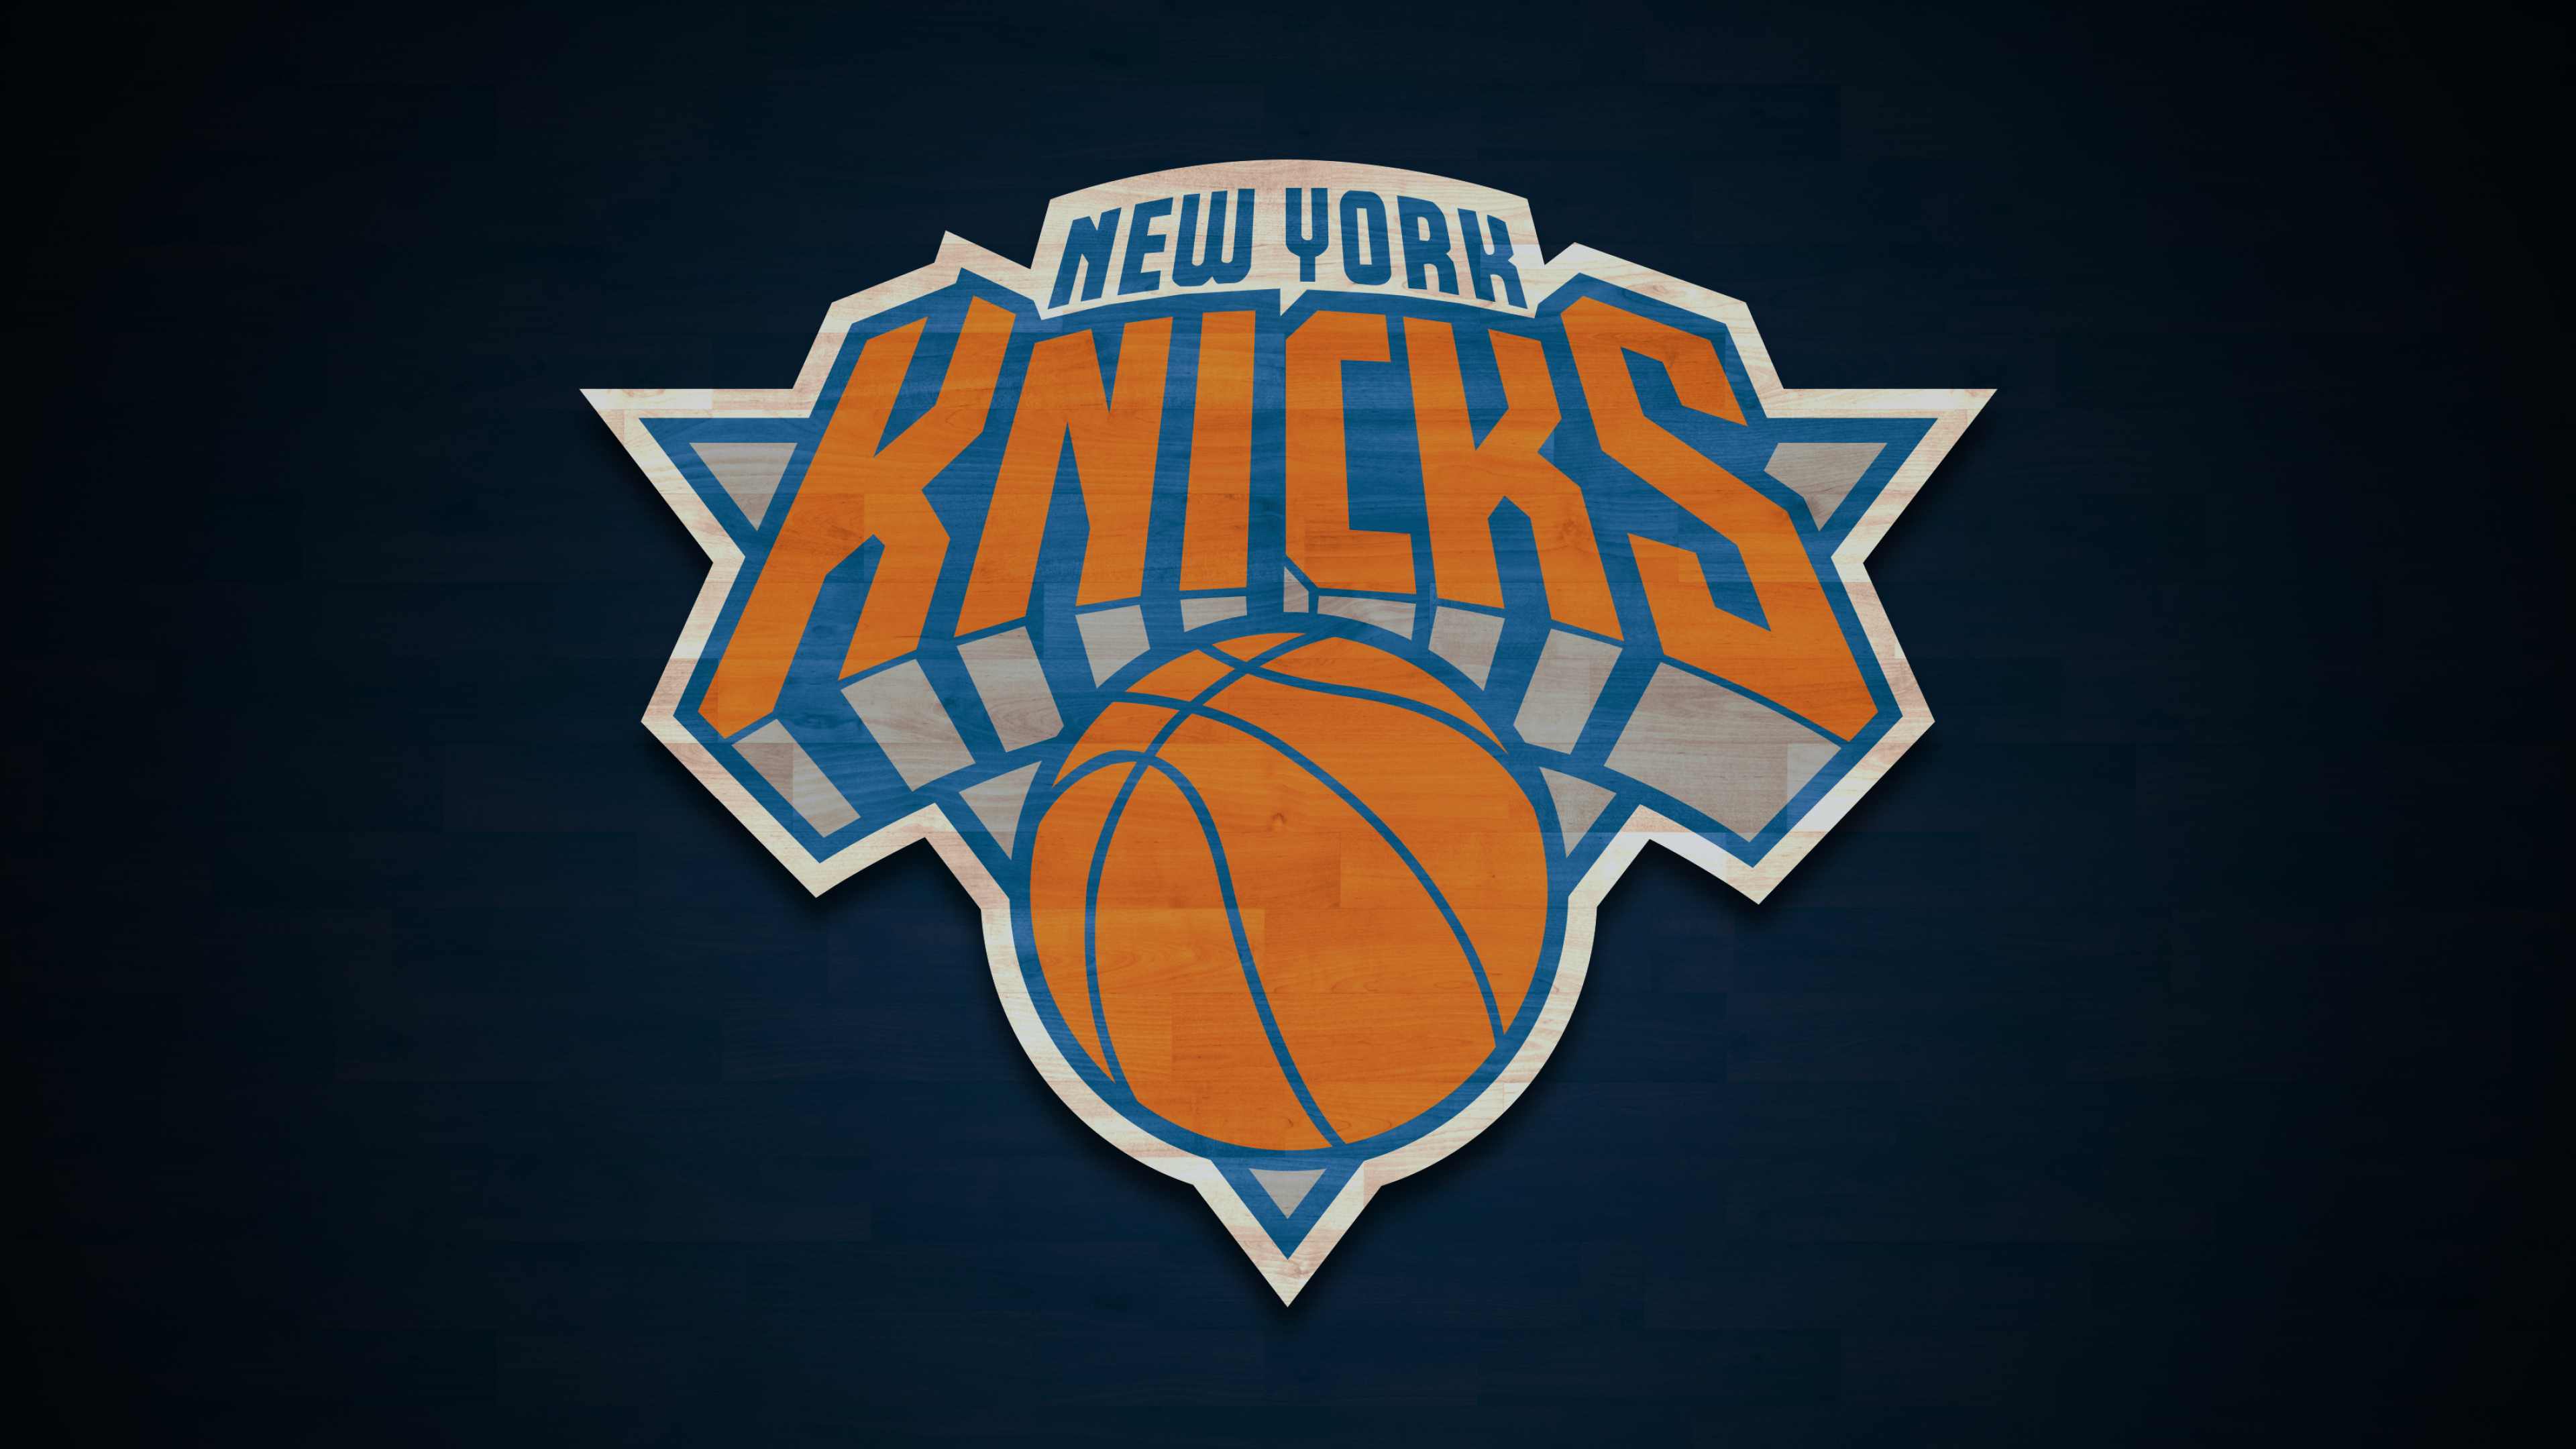 2021 New York Knicks, Wallpapers, Pro sports backgrounds, 3840x2160 4K Desktop